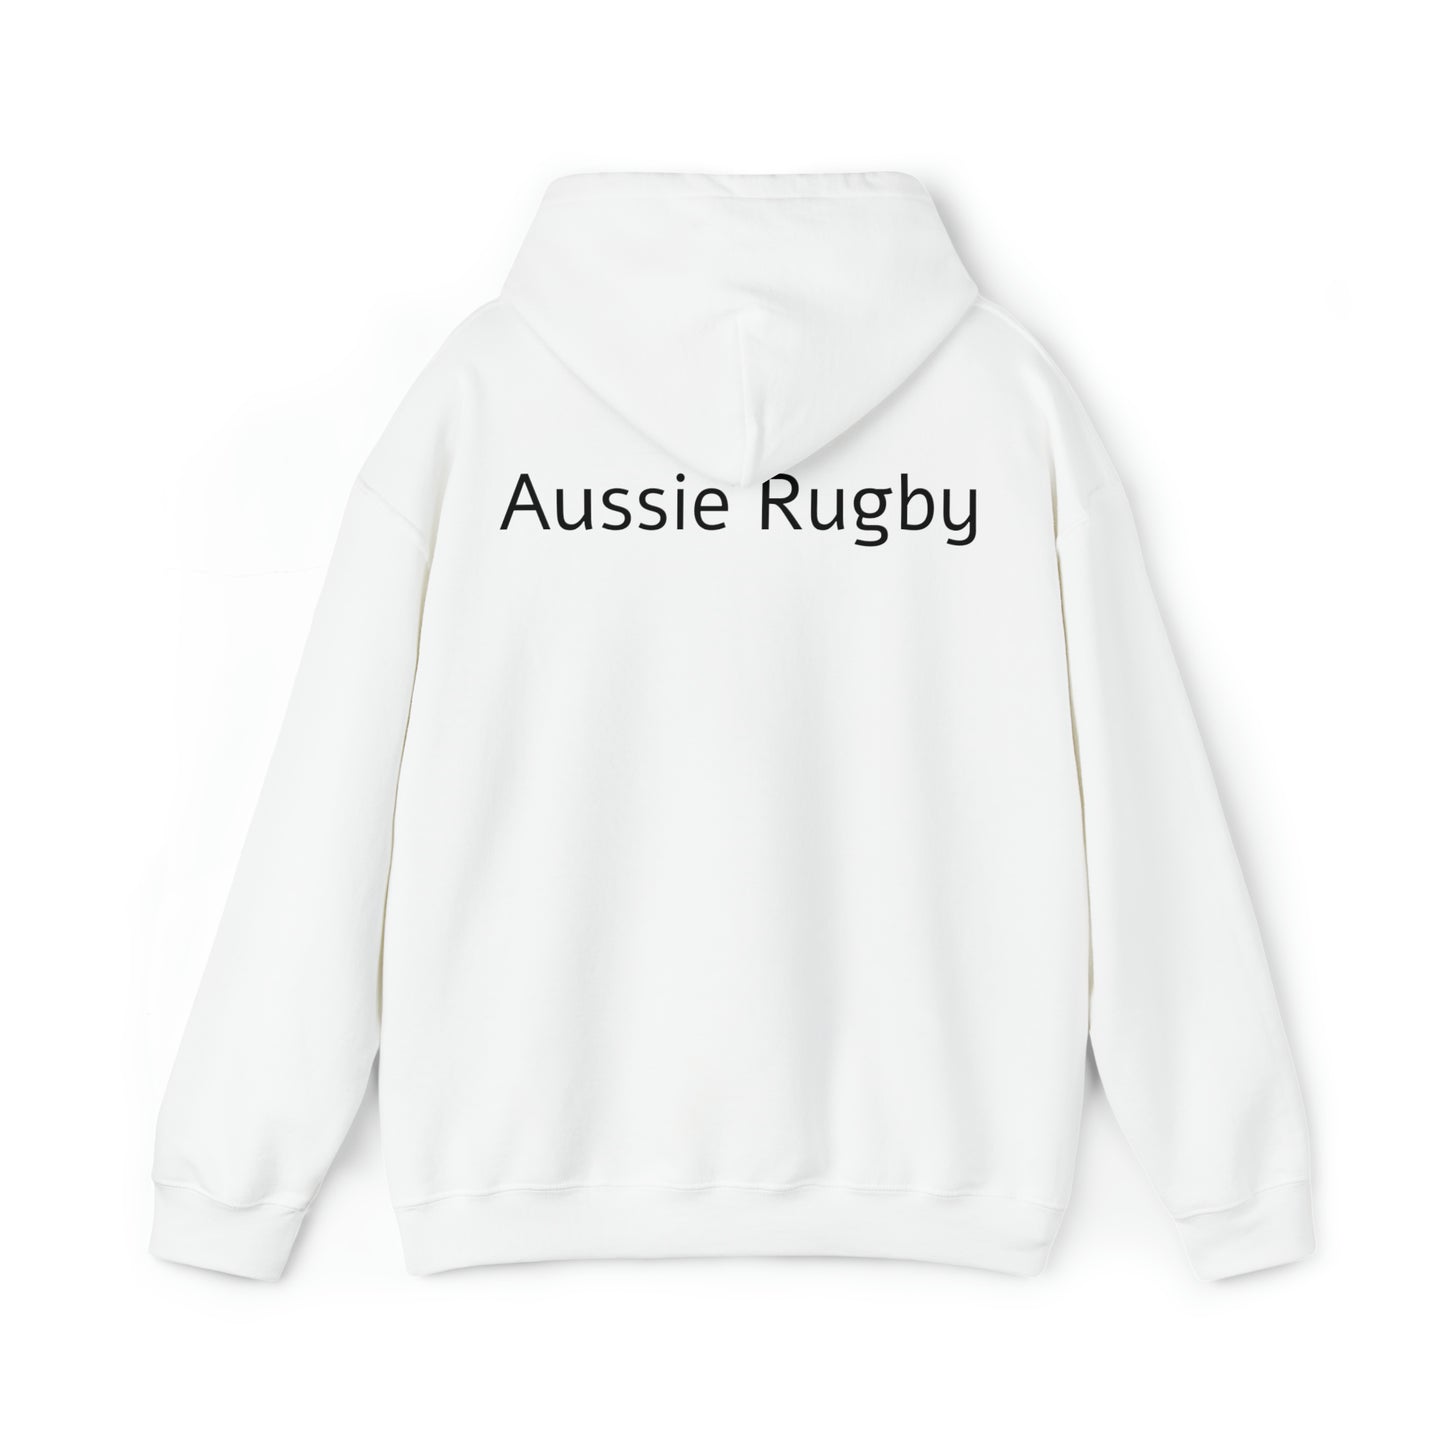 Ready Aussies - light hoodies